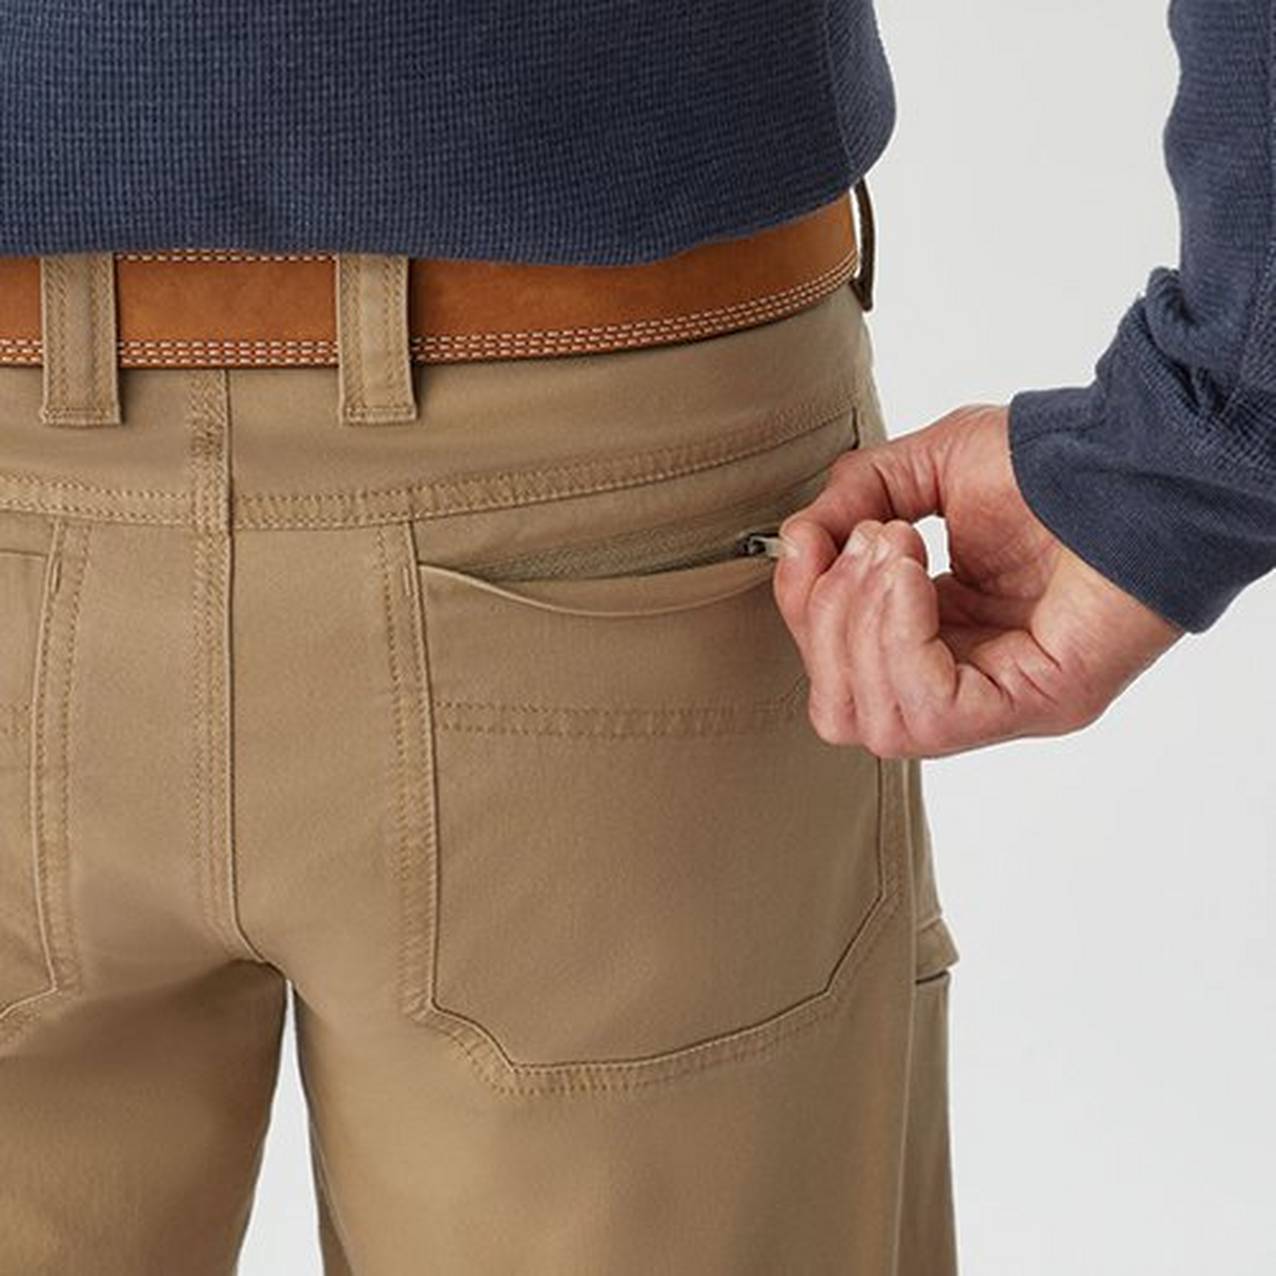 Close up of a hand zipping a rear pants pocket closed